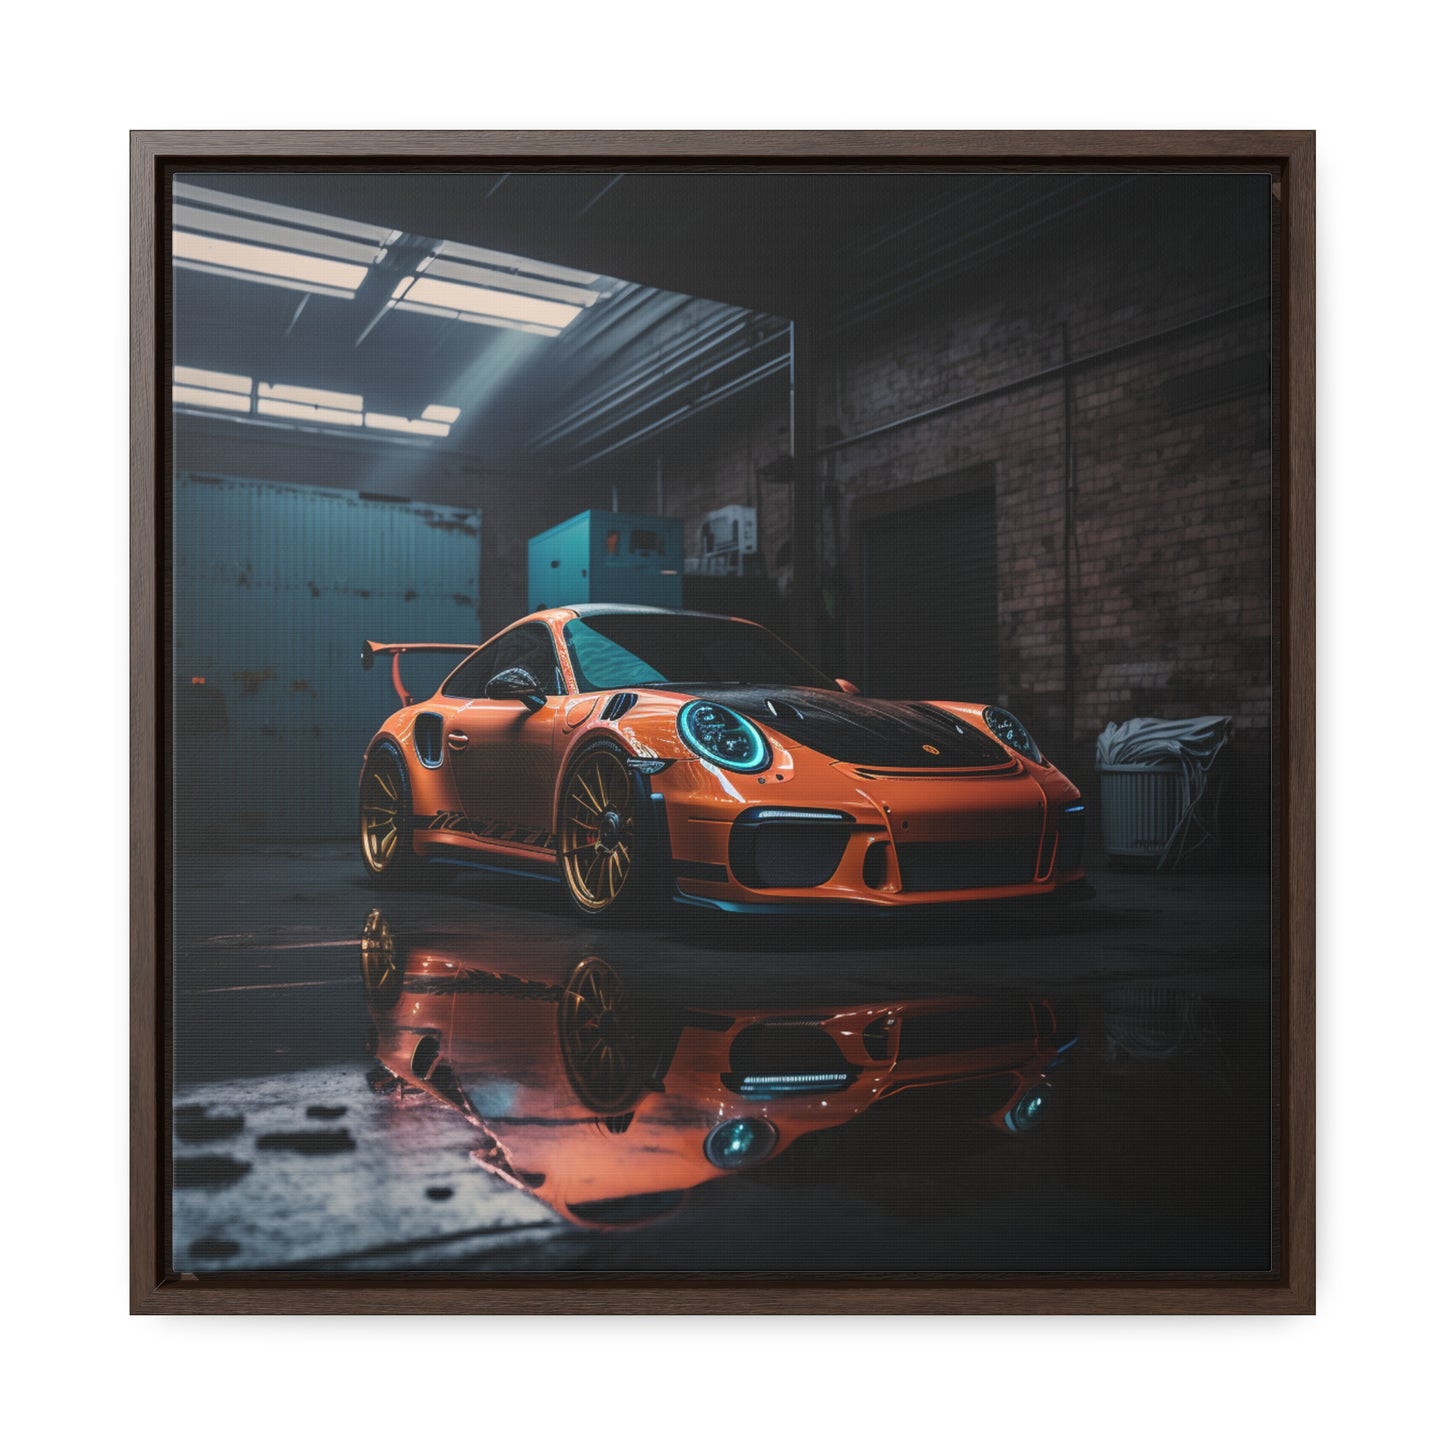 Gallery Canvas Wraps, Square Frame Porsche Color 1